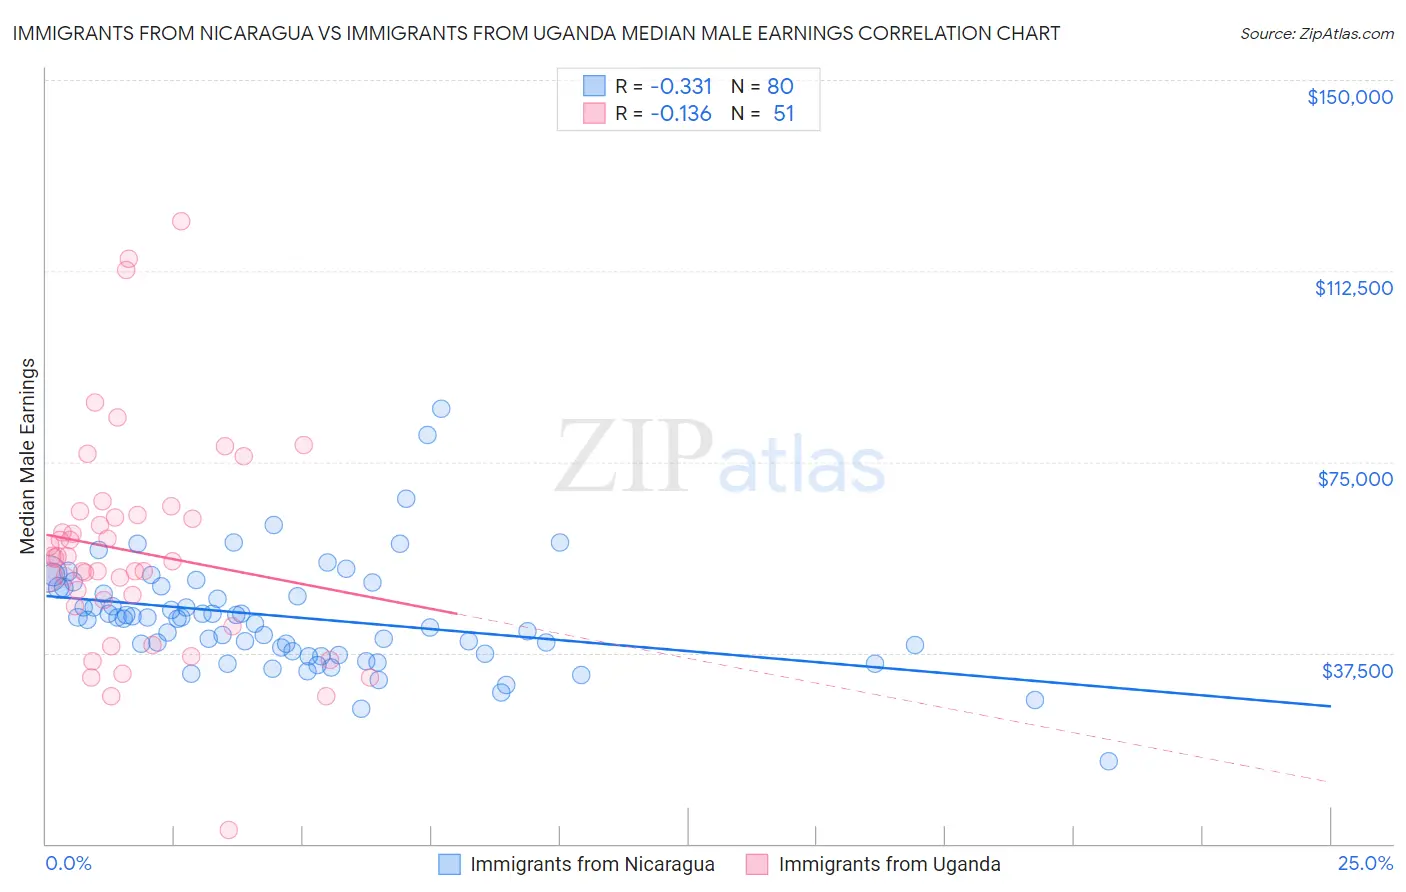 Immigrants from Nicaragua vs Immigrants from Uganda Median Male Earnings